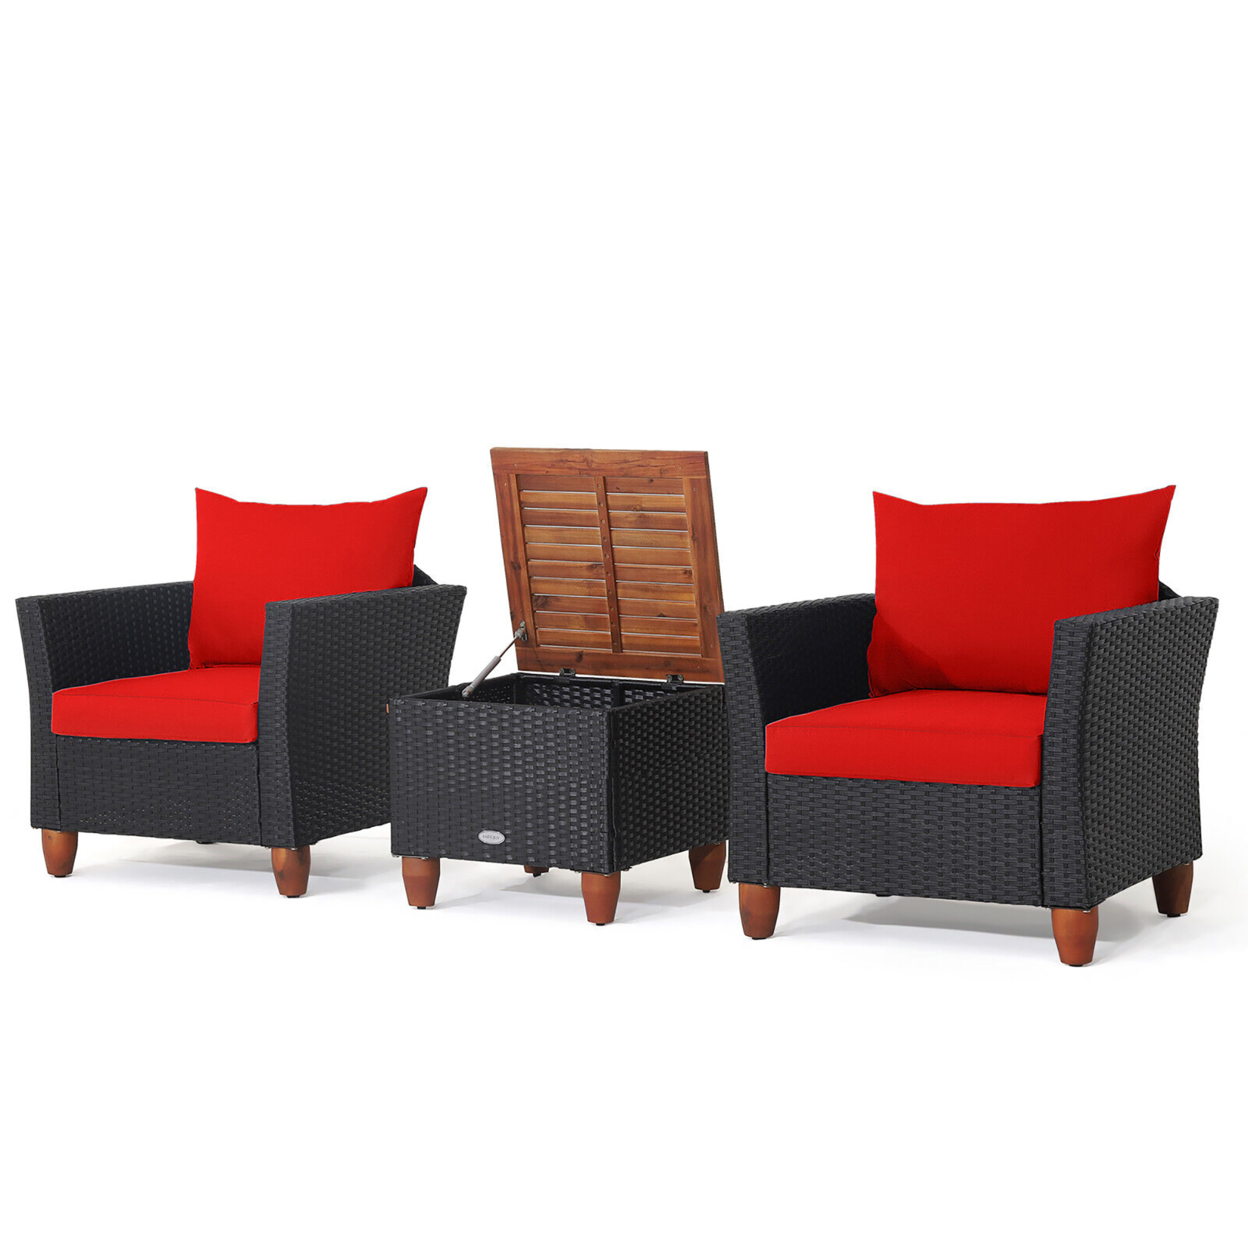 3PCS Patio Rattan Conversation Set Outdoor Furniture Set W/ Cushions - Red